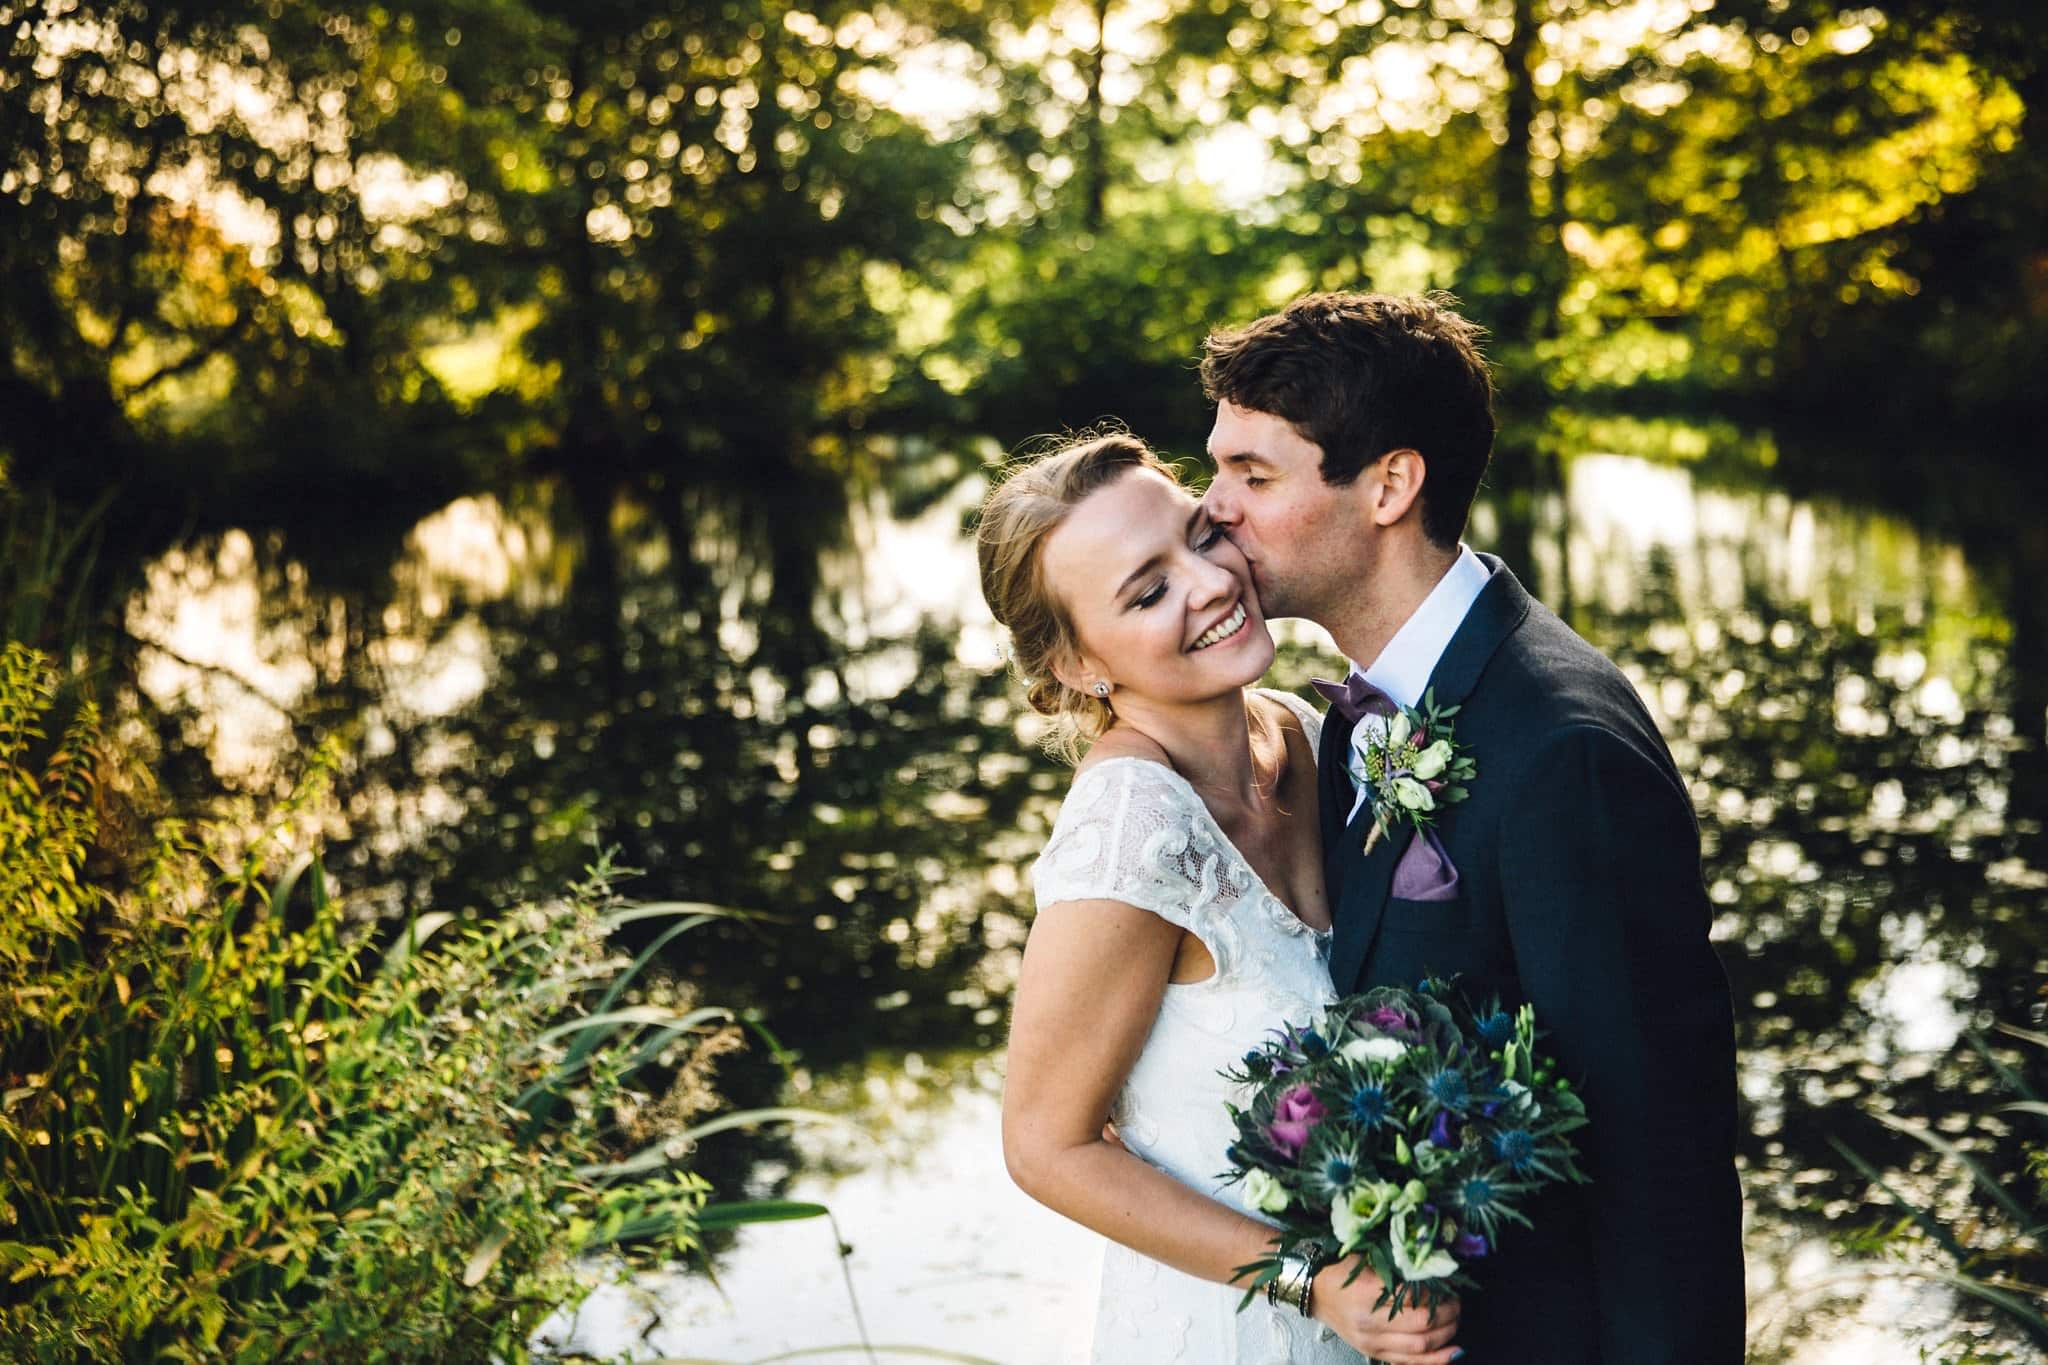 Wedding kiss by lake